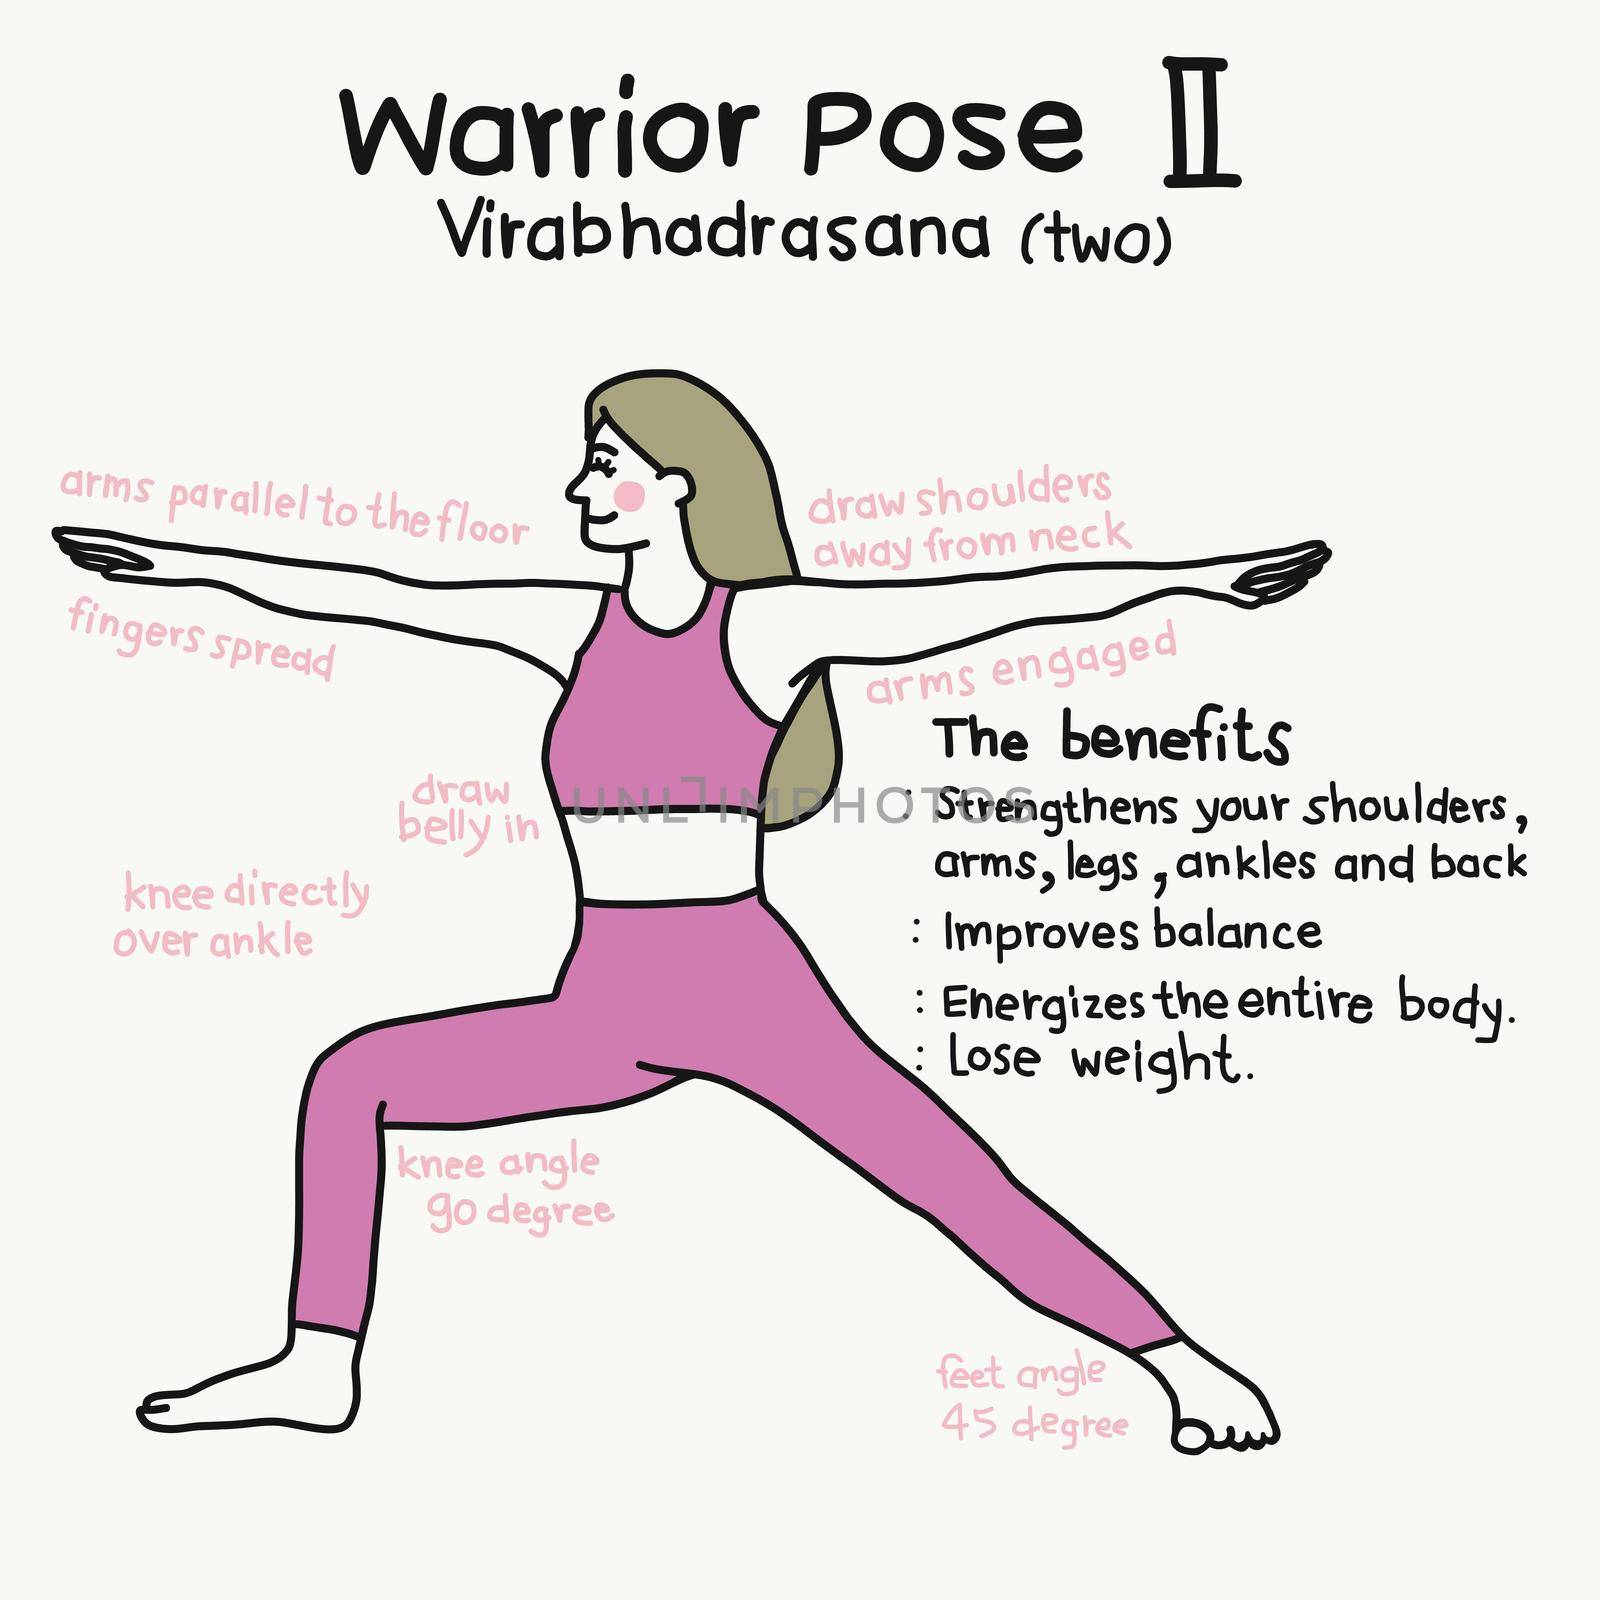 Warrior II yoga pose and benefits cartoon vector illustration by Yoopho